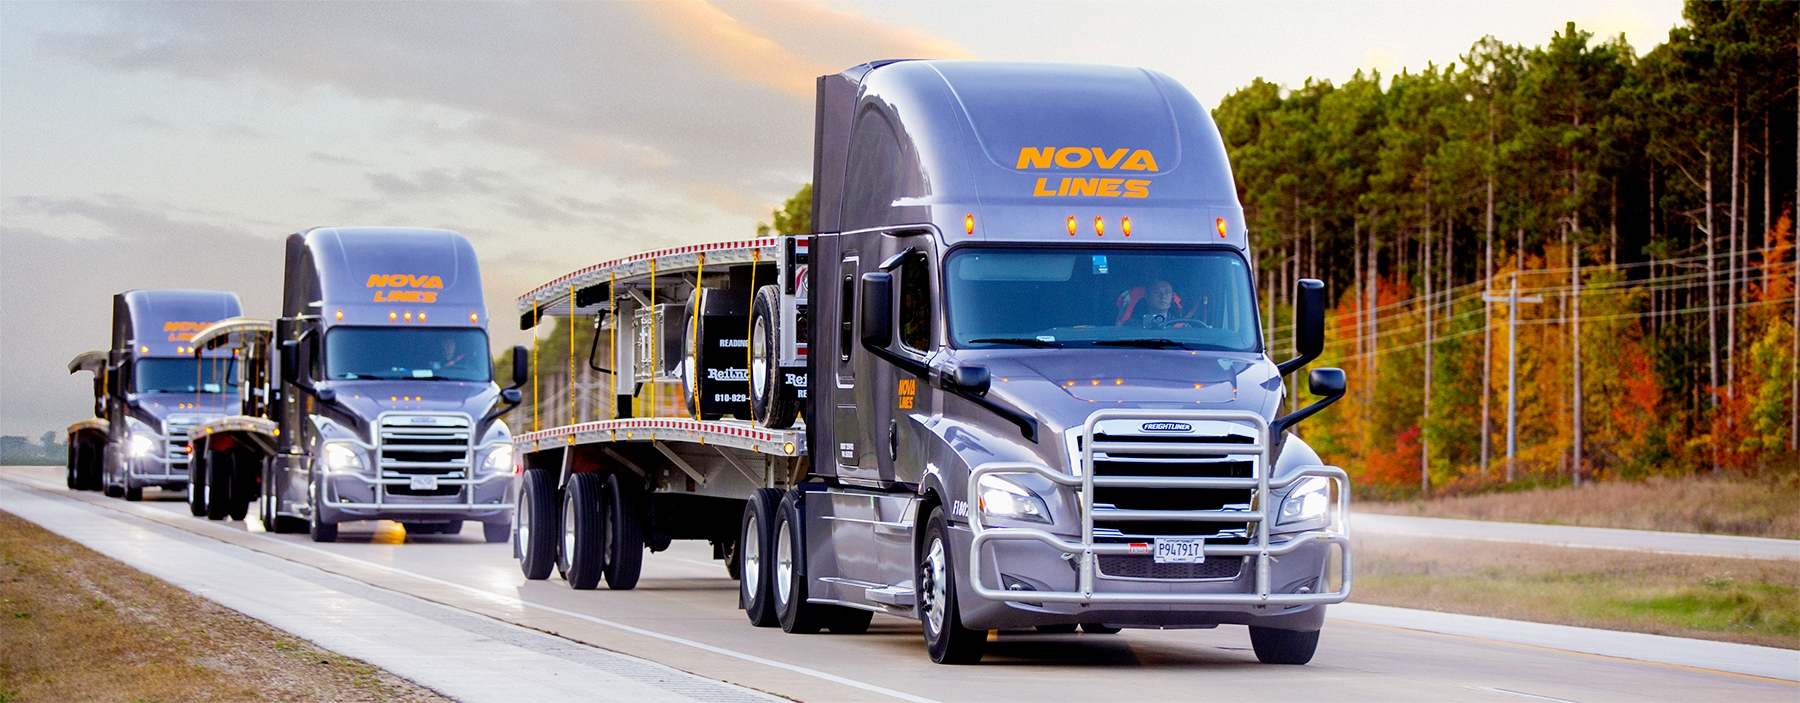 Nova Lines Trucking